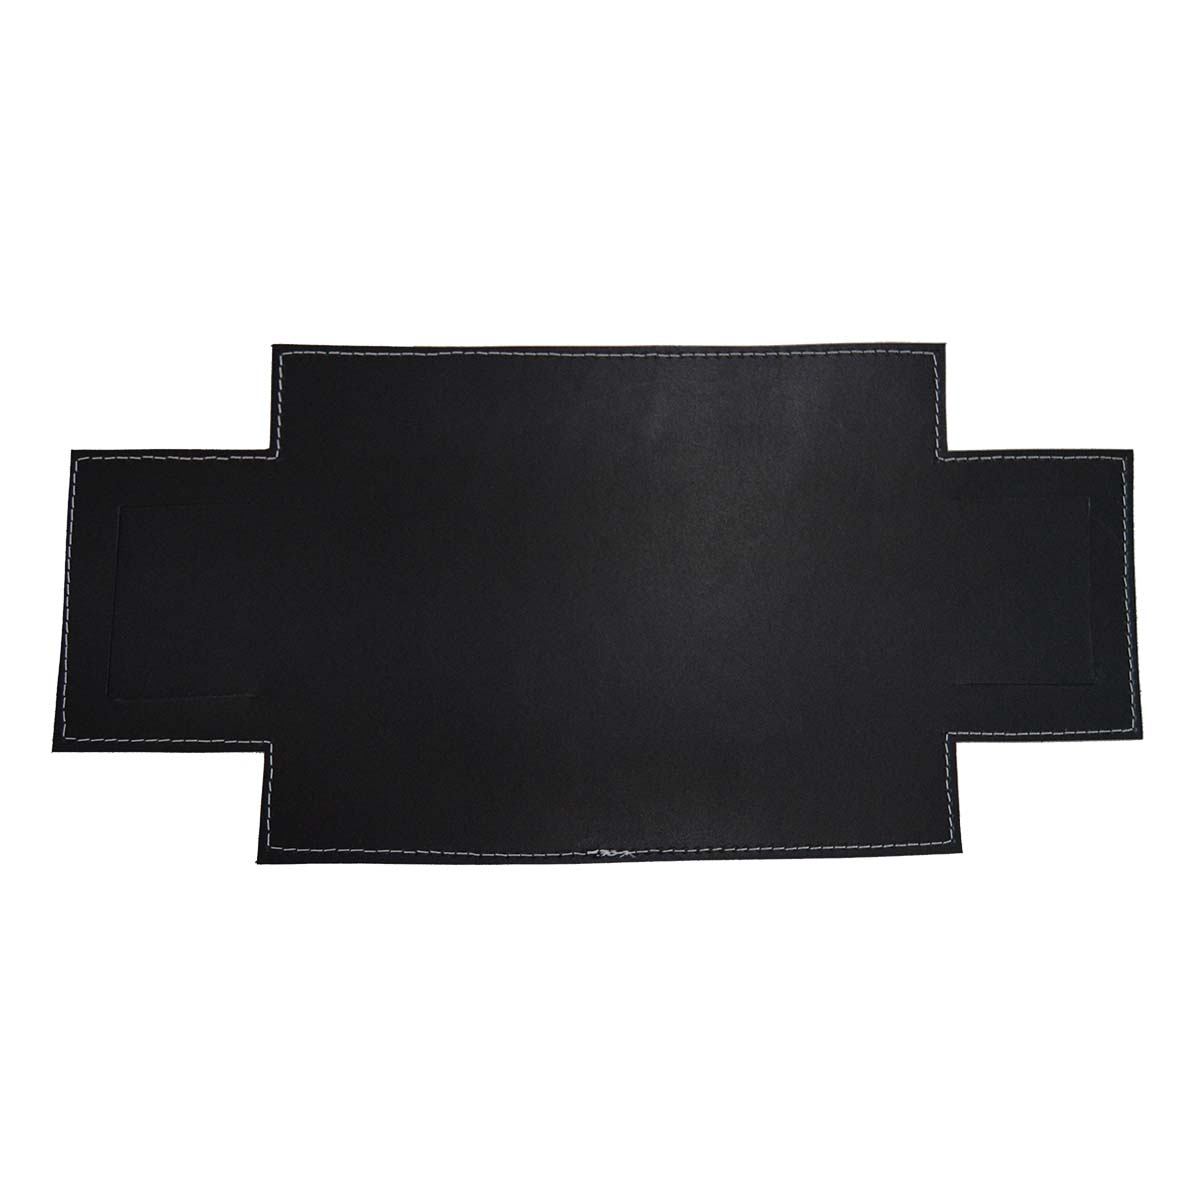 By-Muuh Lille sort læderomslag til fad rektangulært, 28 x 21 cm